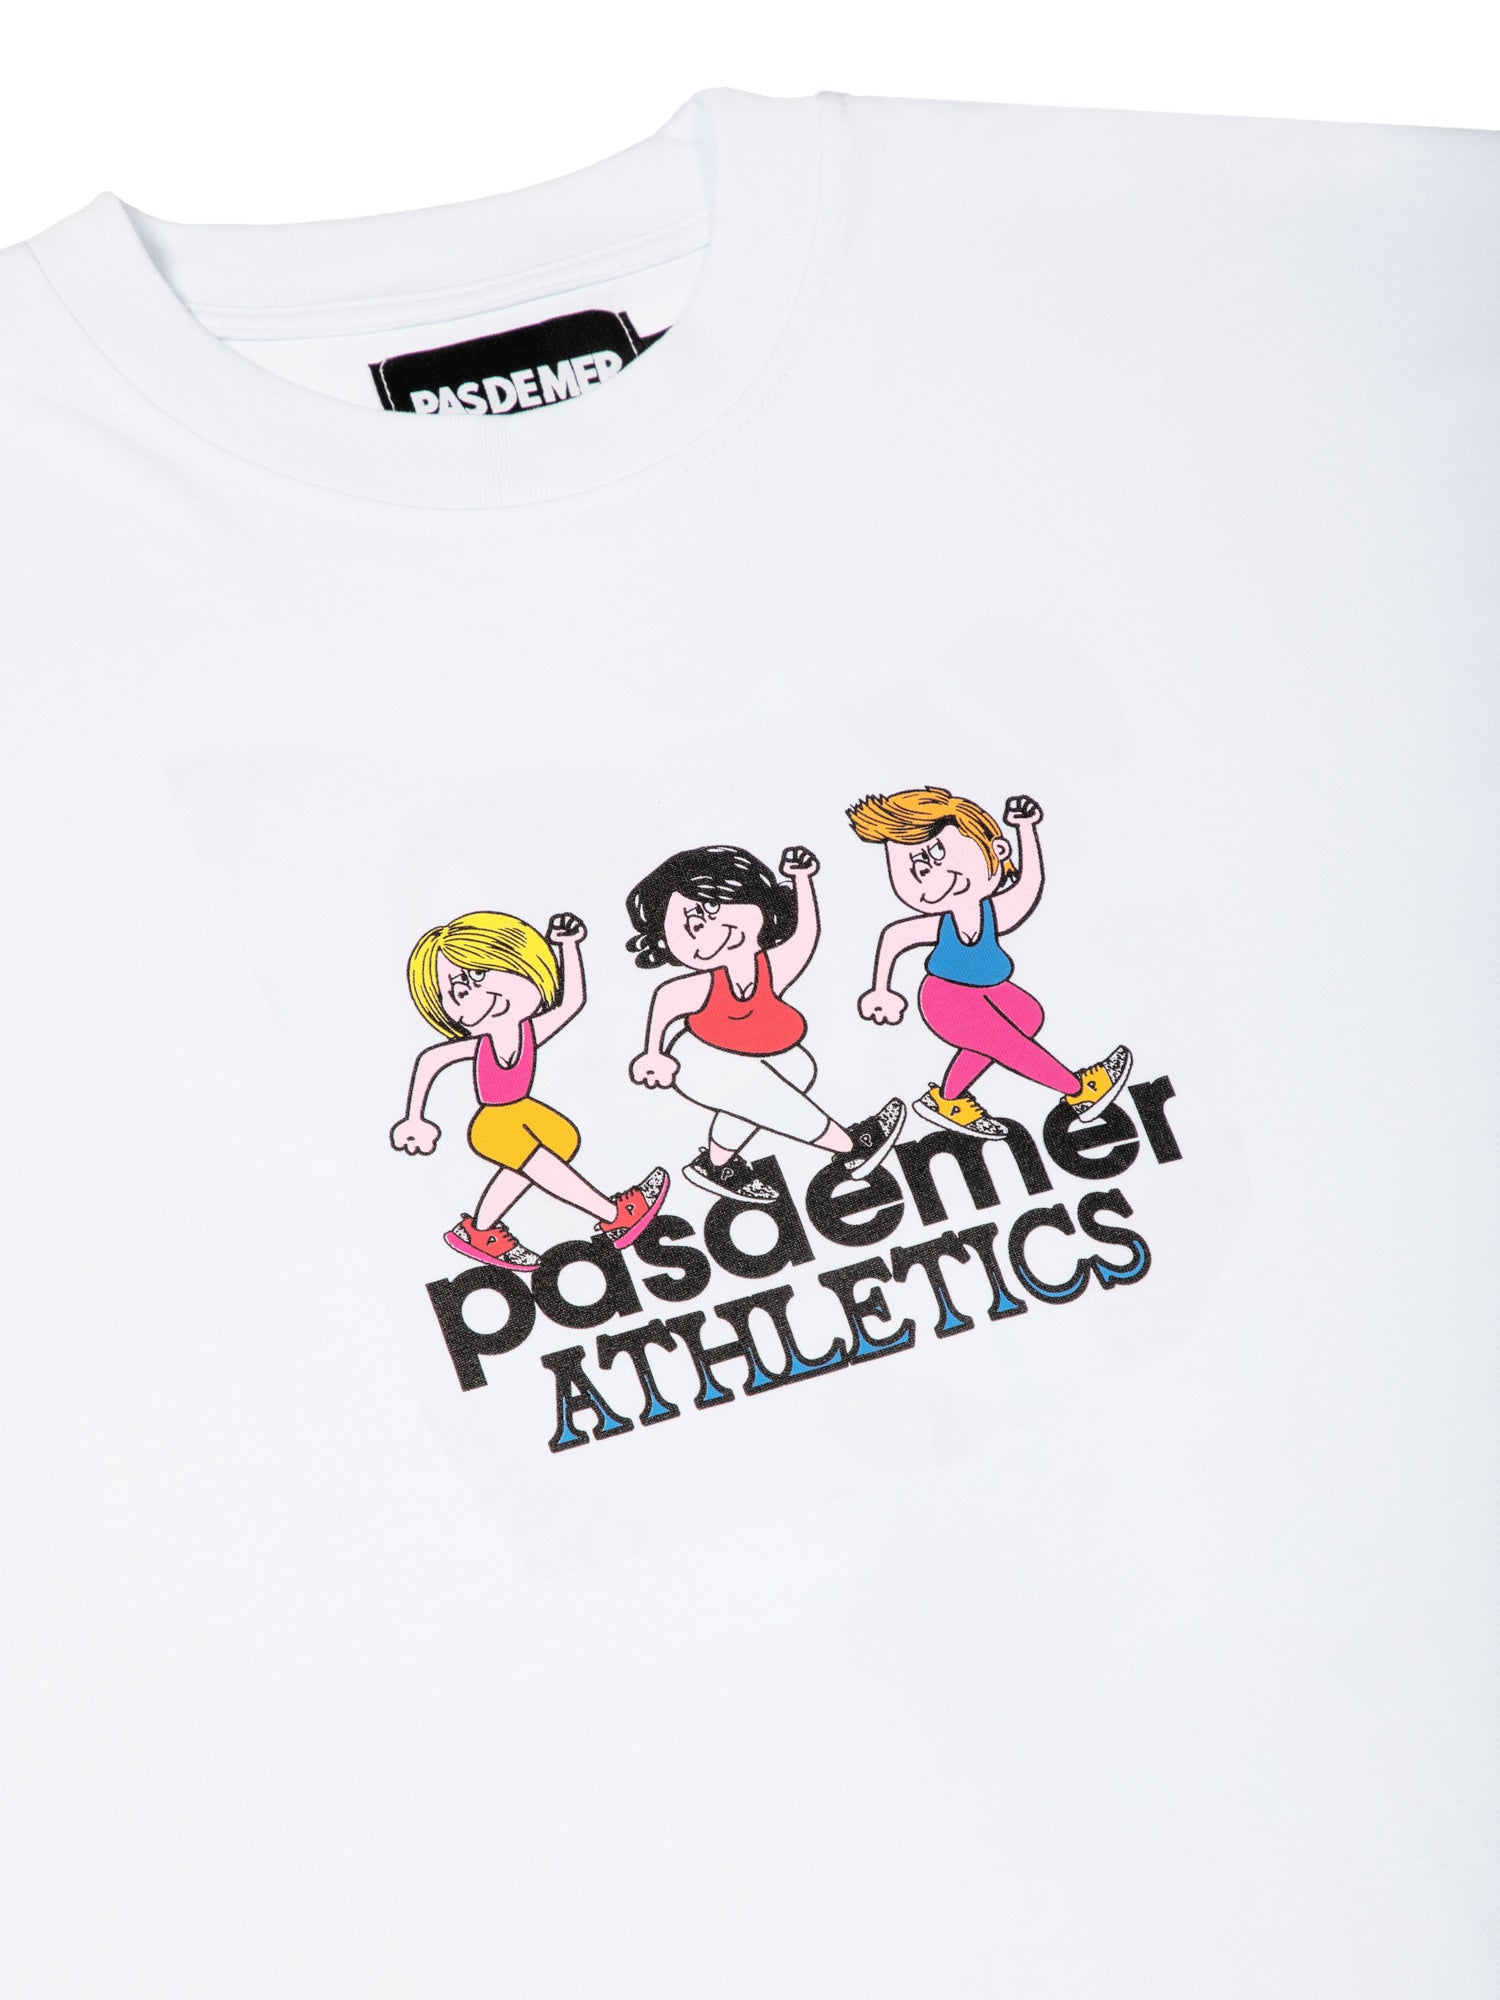 Athletics T-Shirt